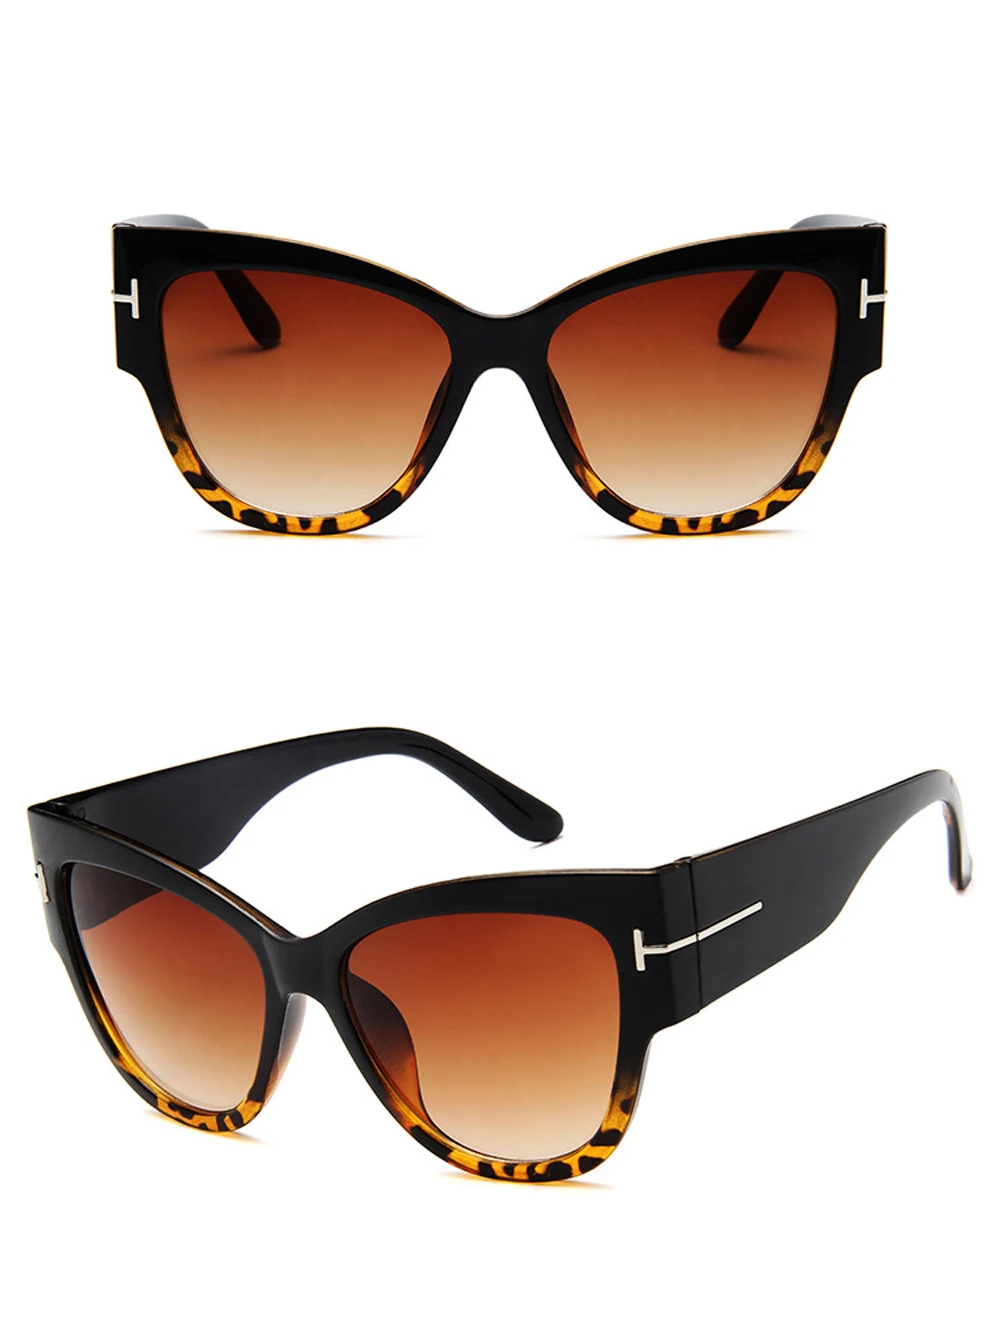 MUSELIFE New Fashion Brand Designer Cat Eye Women Sunglasses Female Gradient Points Sun Glasses Big Oculos feminino de sol UV400 cute sunglasses